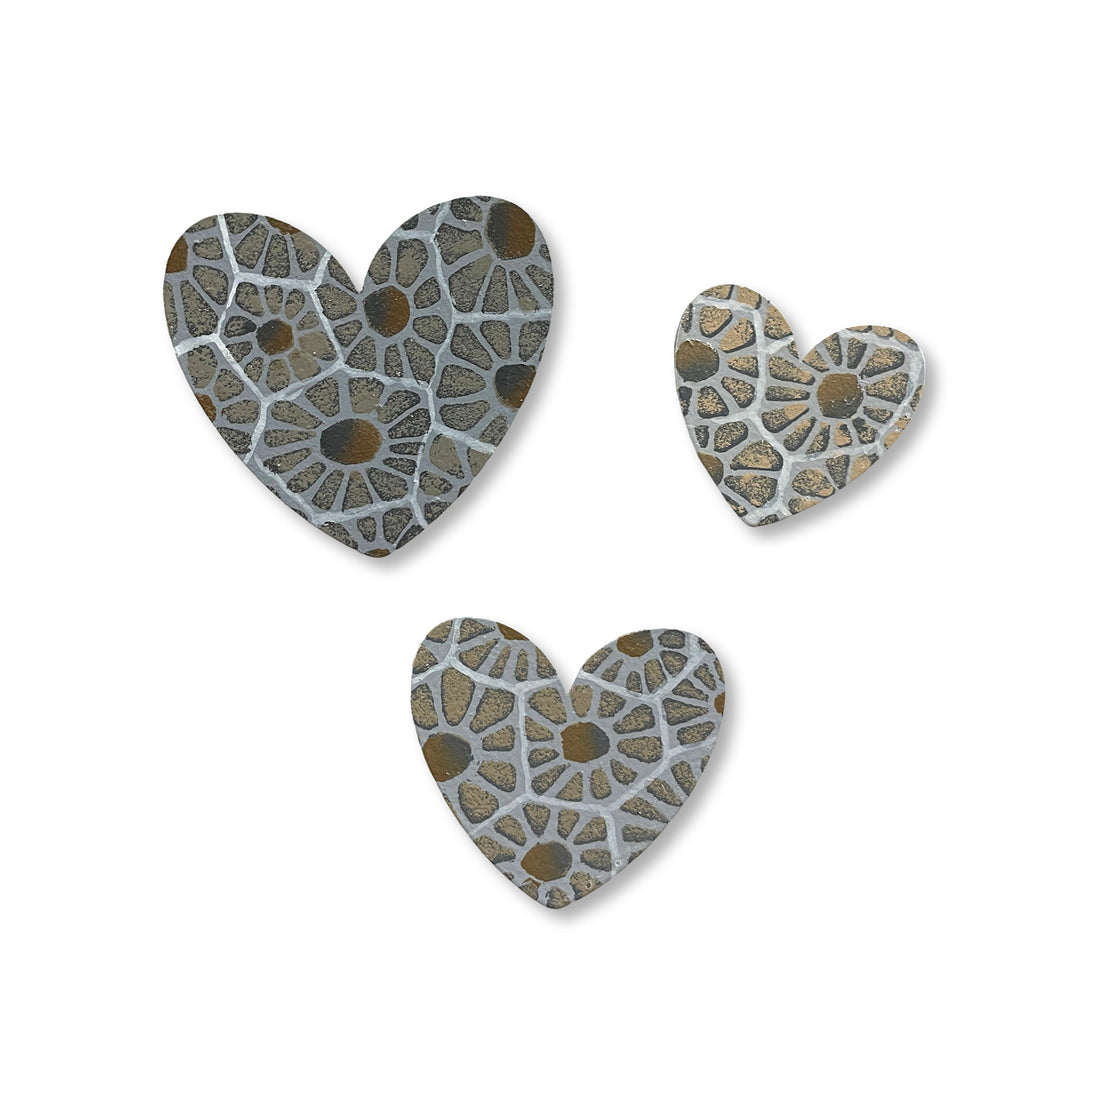 Petoskey Stone Heart Magnets S/3